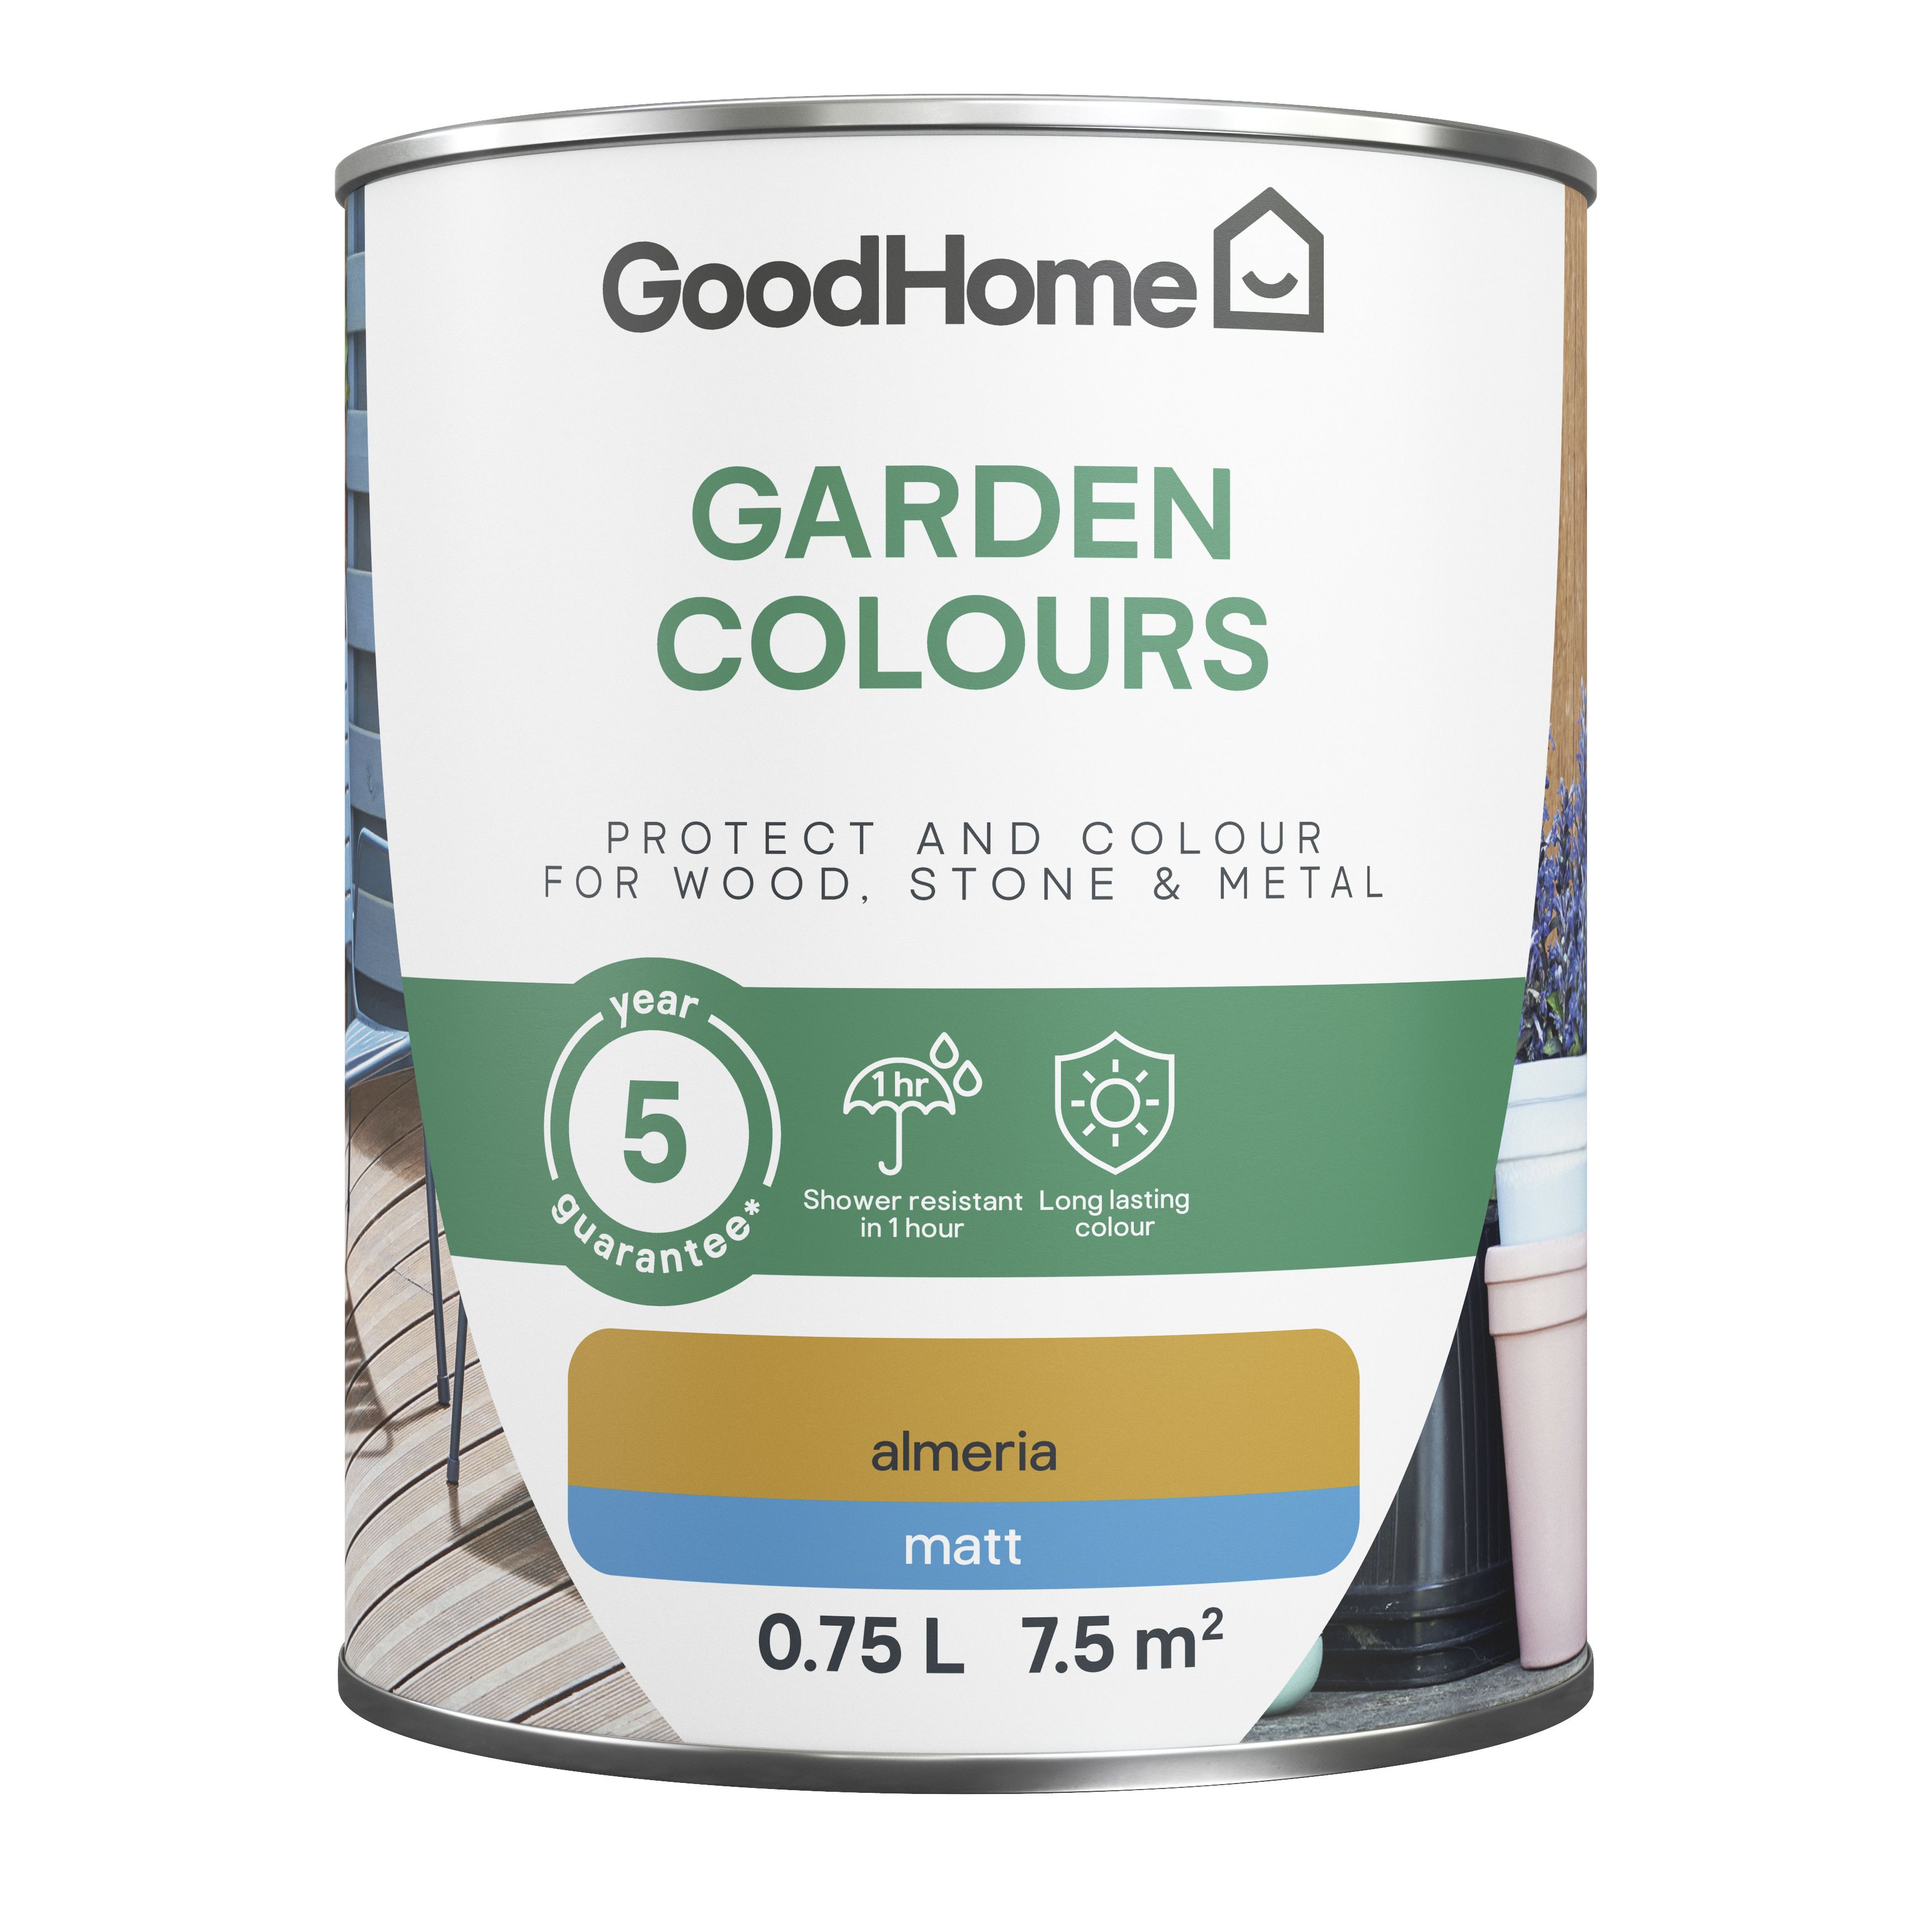 GoodHome Colour It Almeria Matt Multi-surface paint, 750ml